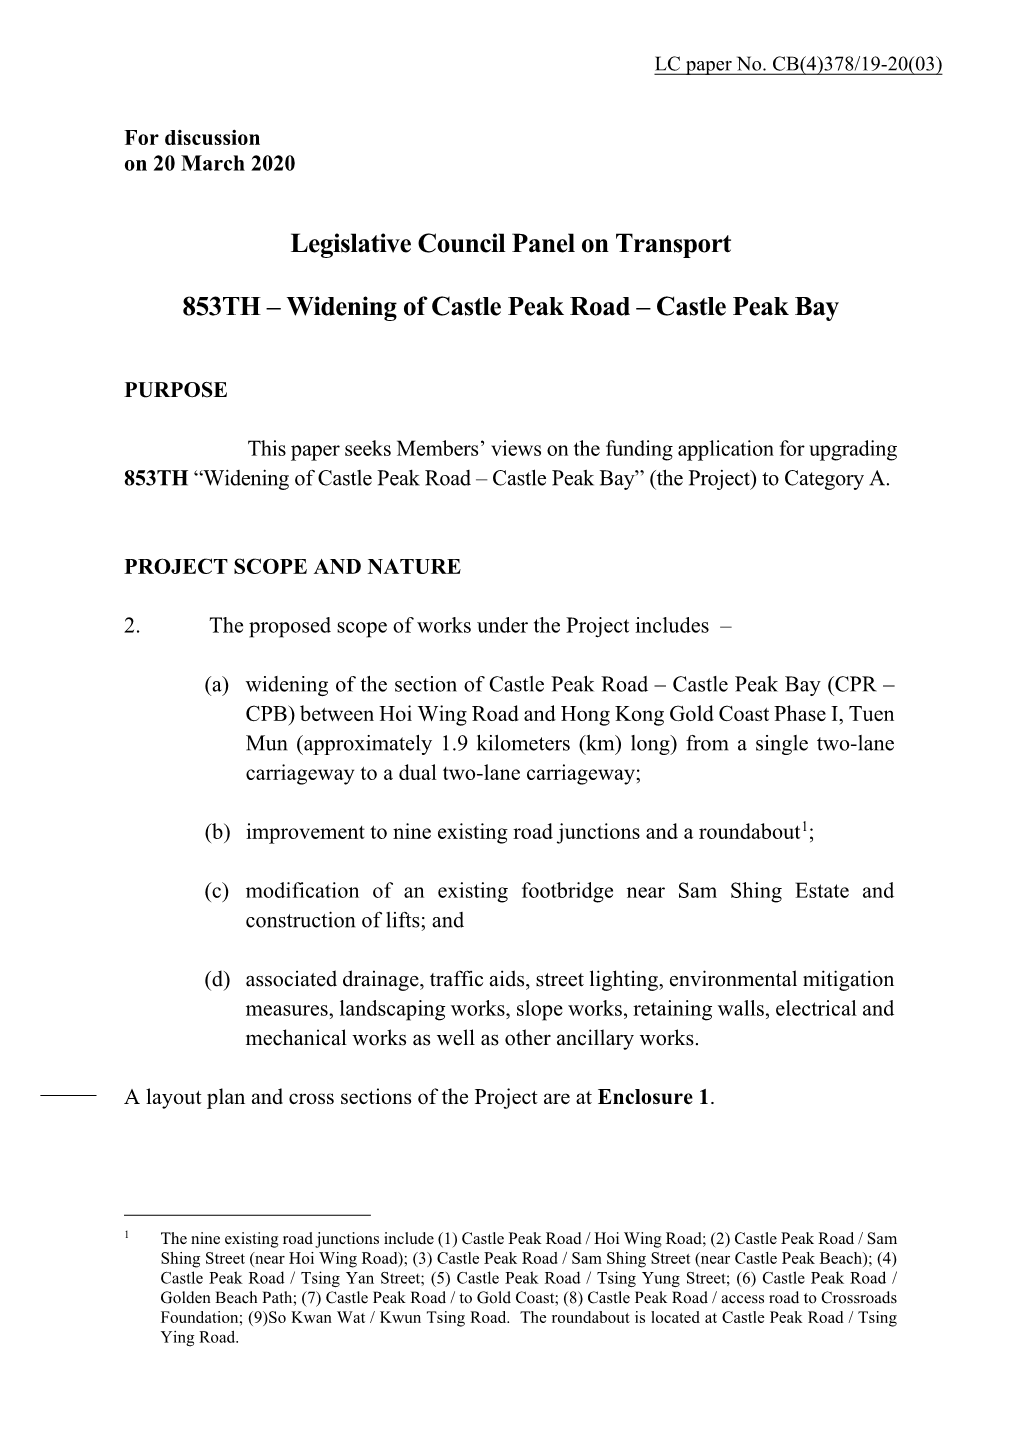 Legislative Council Panel on Transport 853TH – Widening of Castle Peak Road – Castle Peak